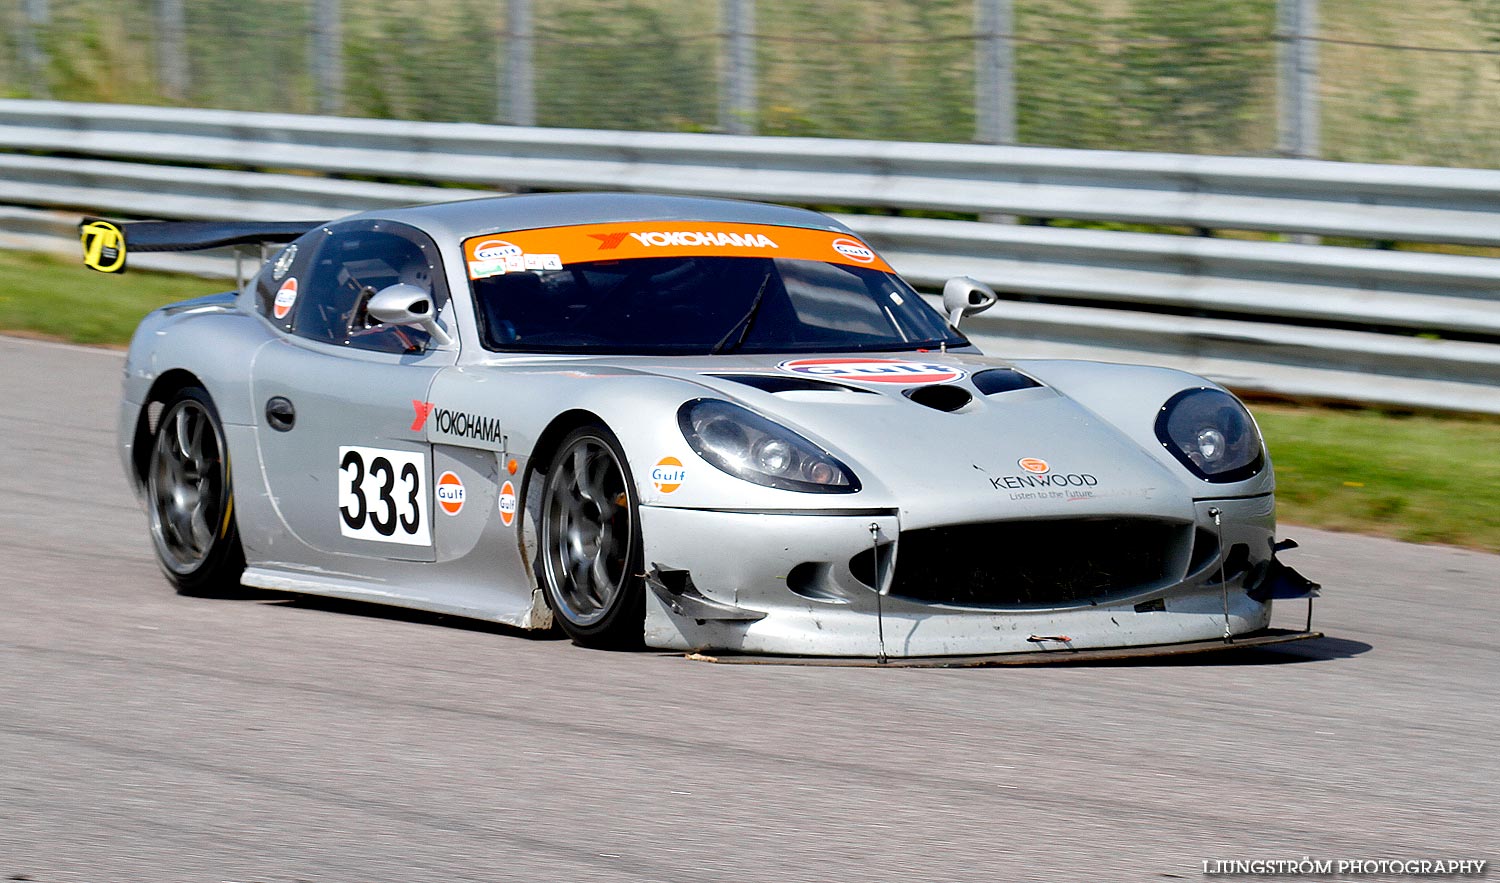 SSK Raceweek,mix,Kinnekulle Ring,Götene,Sverige,Motorsport,,2011,44460